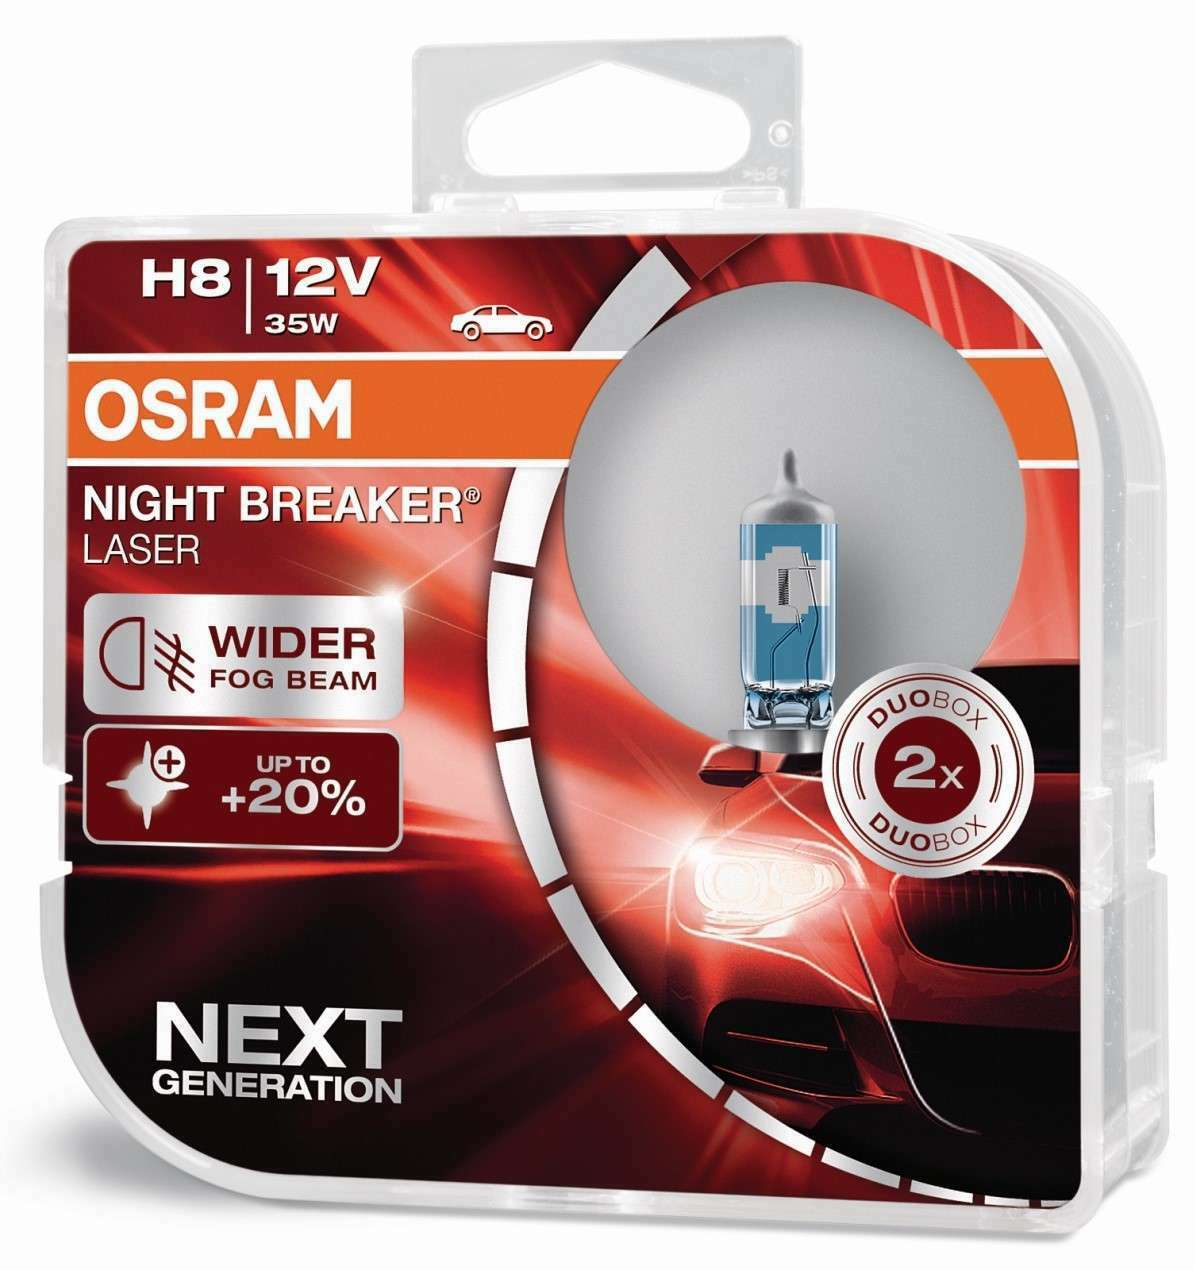 OSRAM H8 Night Breaker Laser Next Generation 12V 35W Bulbs (Twin Pack)